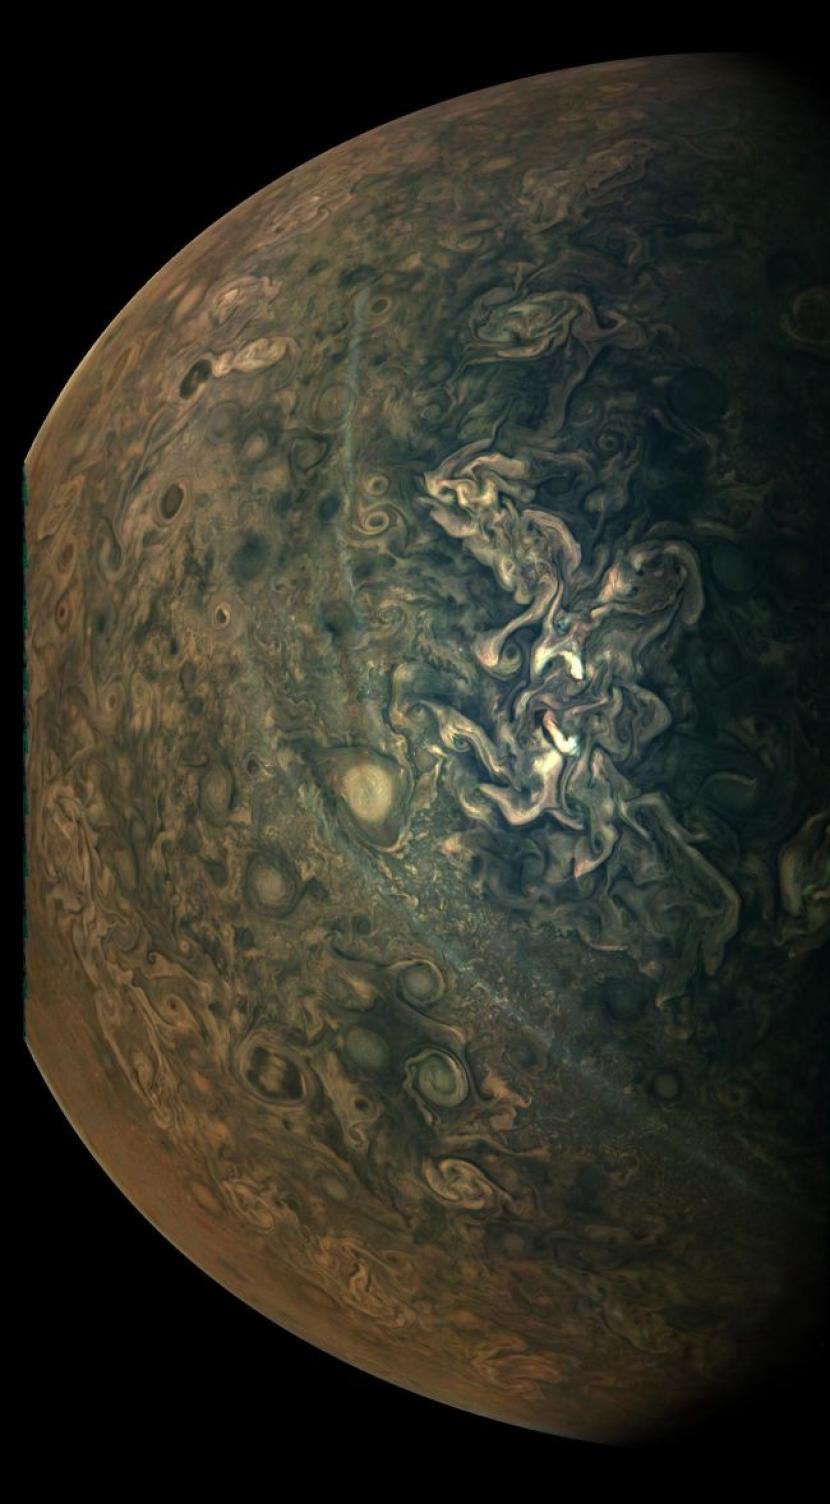 Gambar yang diambil pada 17 Februari lalu menunjukkan gumpalan partikel kabut yang membentang di atas awan utama di atmosfer Jupiter secara vertikal di tengah-tengah gambar. 